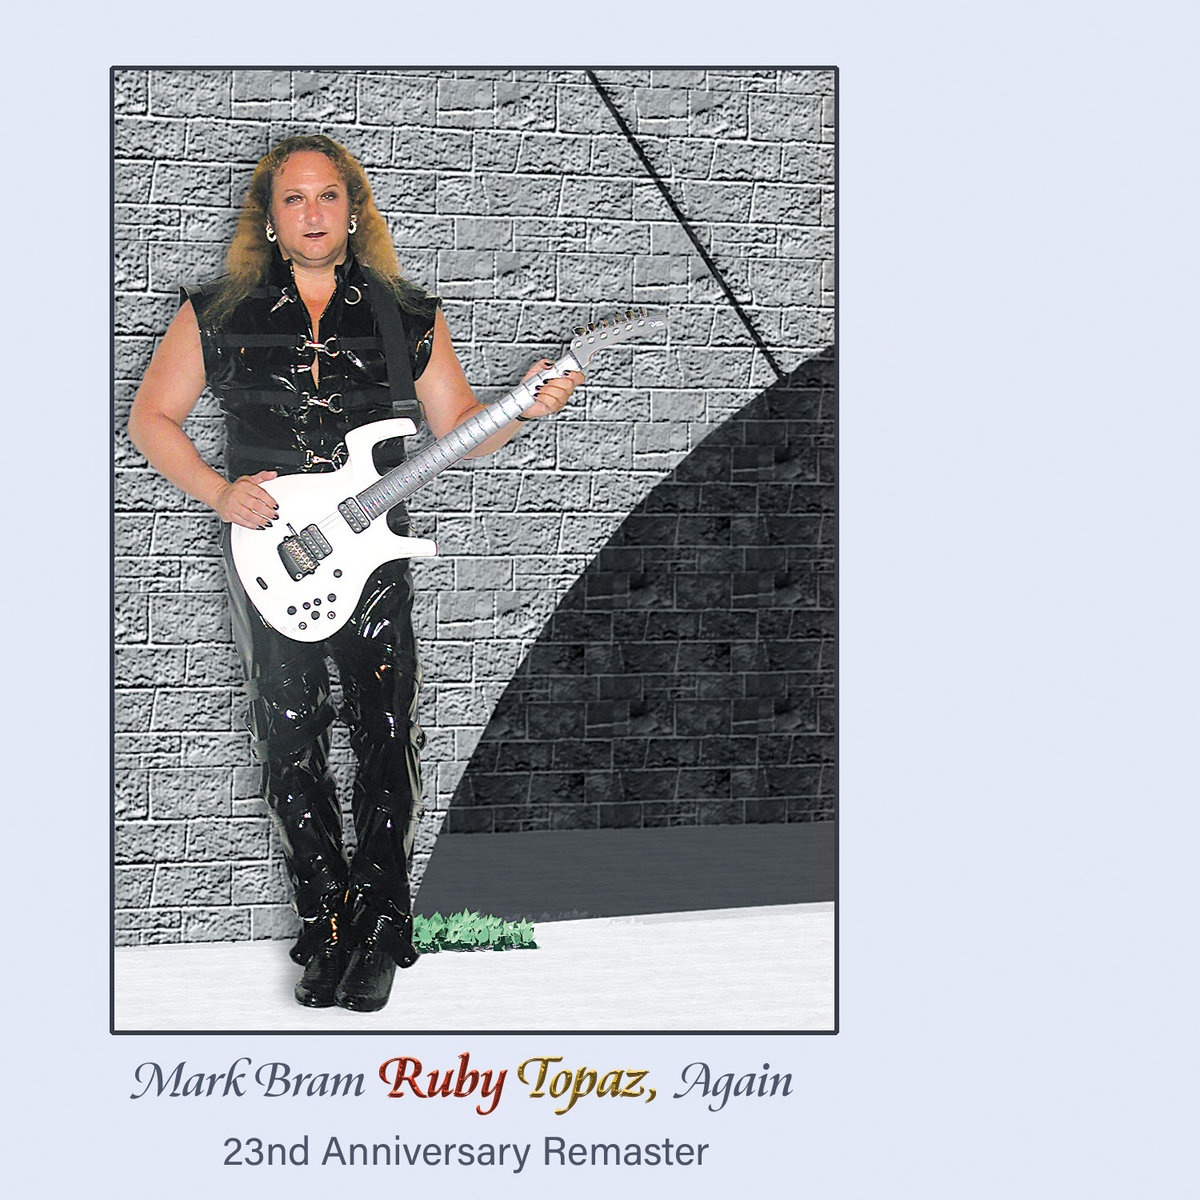 Ruby Topaz ‘Mark Bram / Ruby Topaz Again 23rd Anniversary Remaster’ album artwork